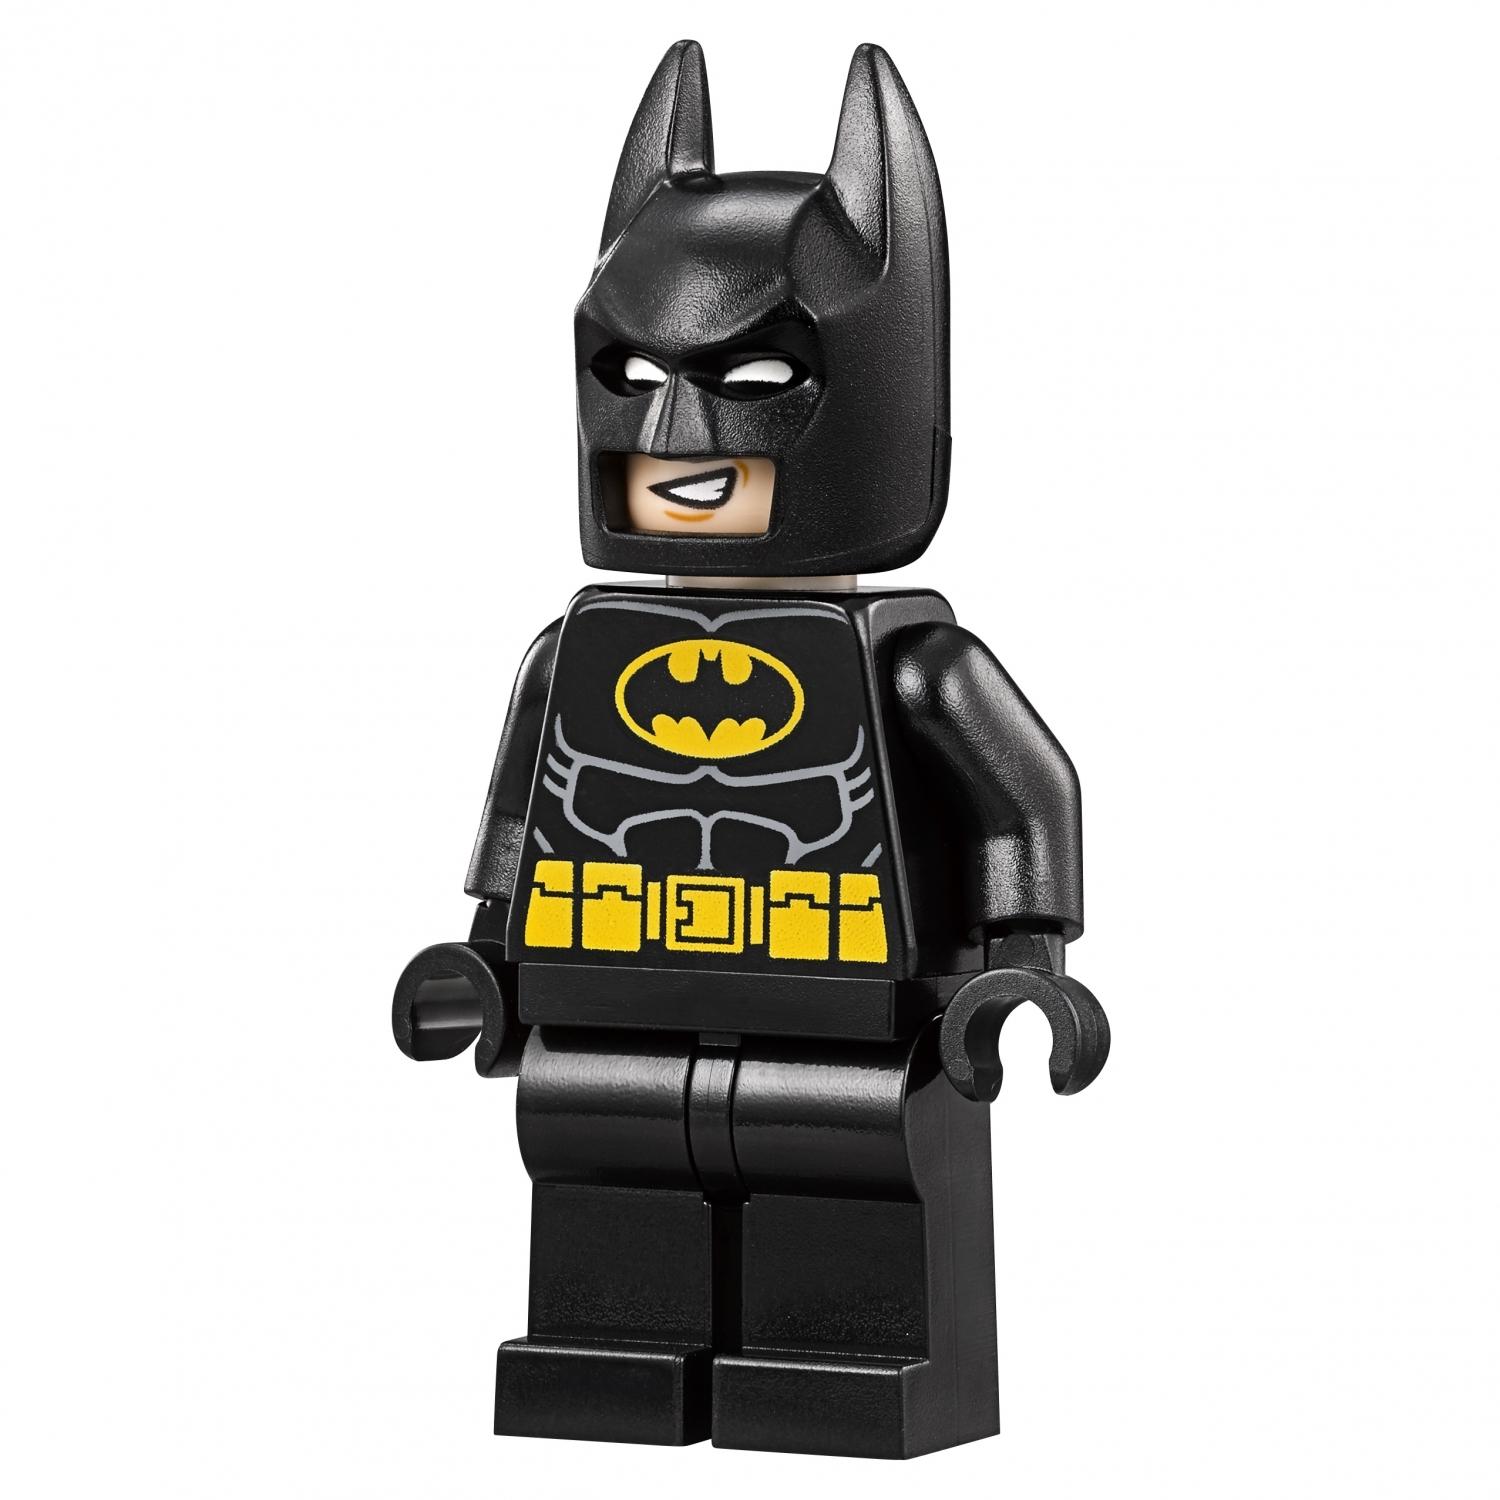 Lego Batman 70913 Схватка с Пугалом